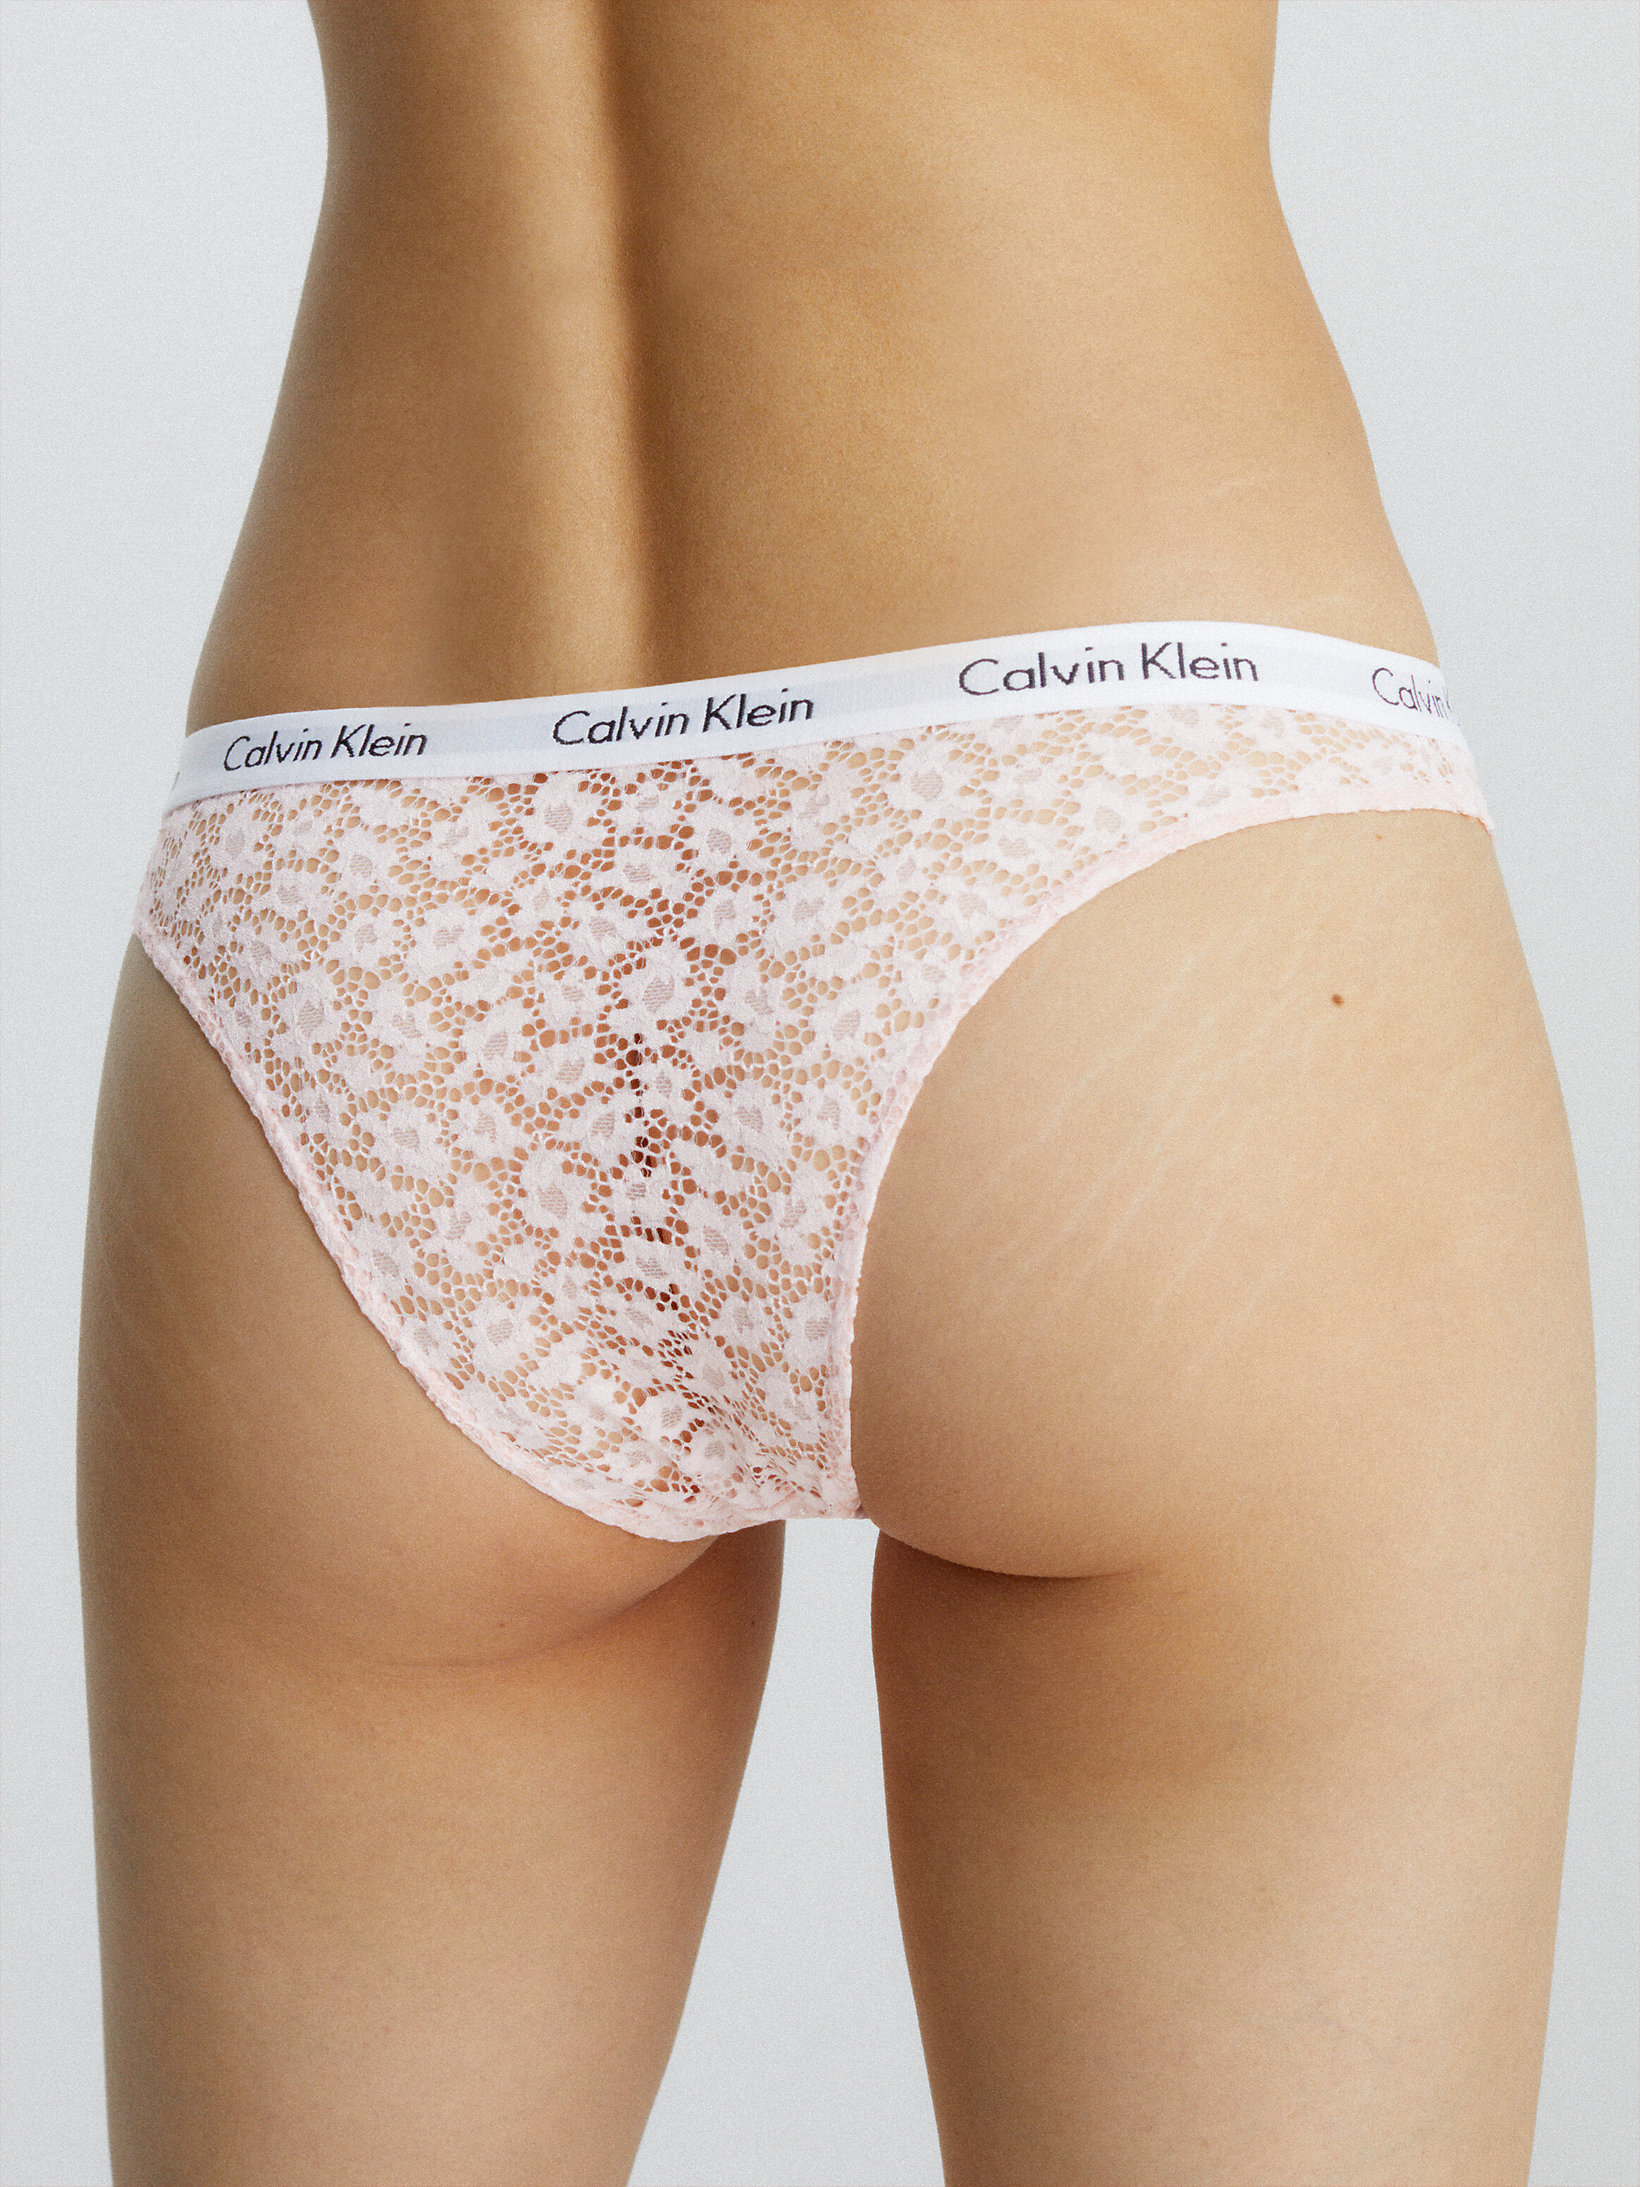 Slip Brésilien - Carousel > Nymphs Thigh > undefined femmes > Calvin Klein